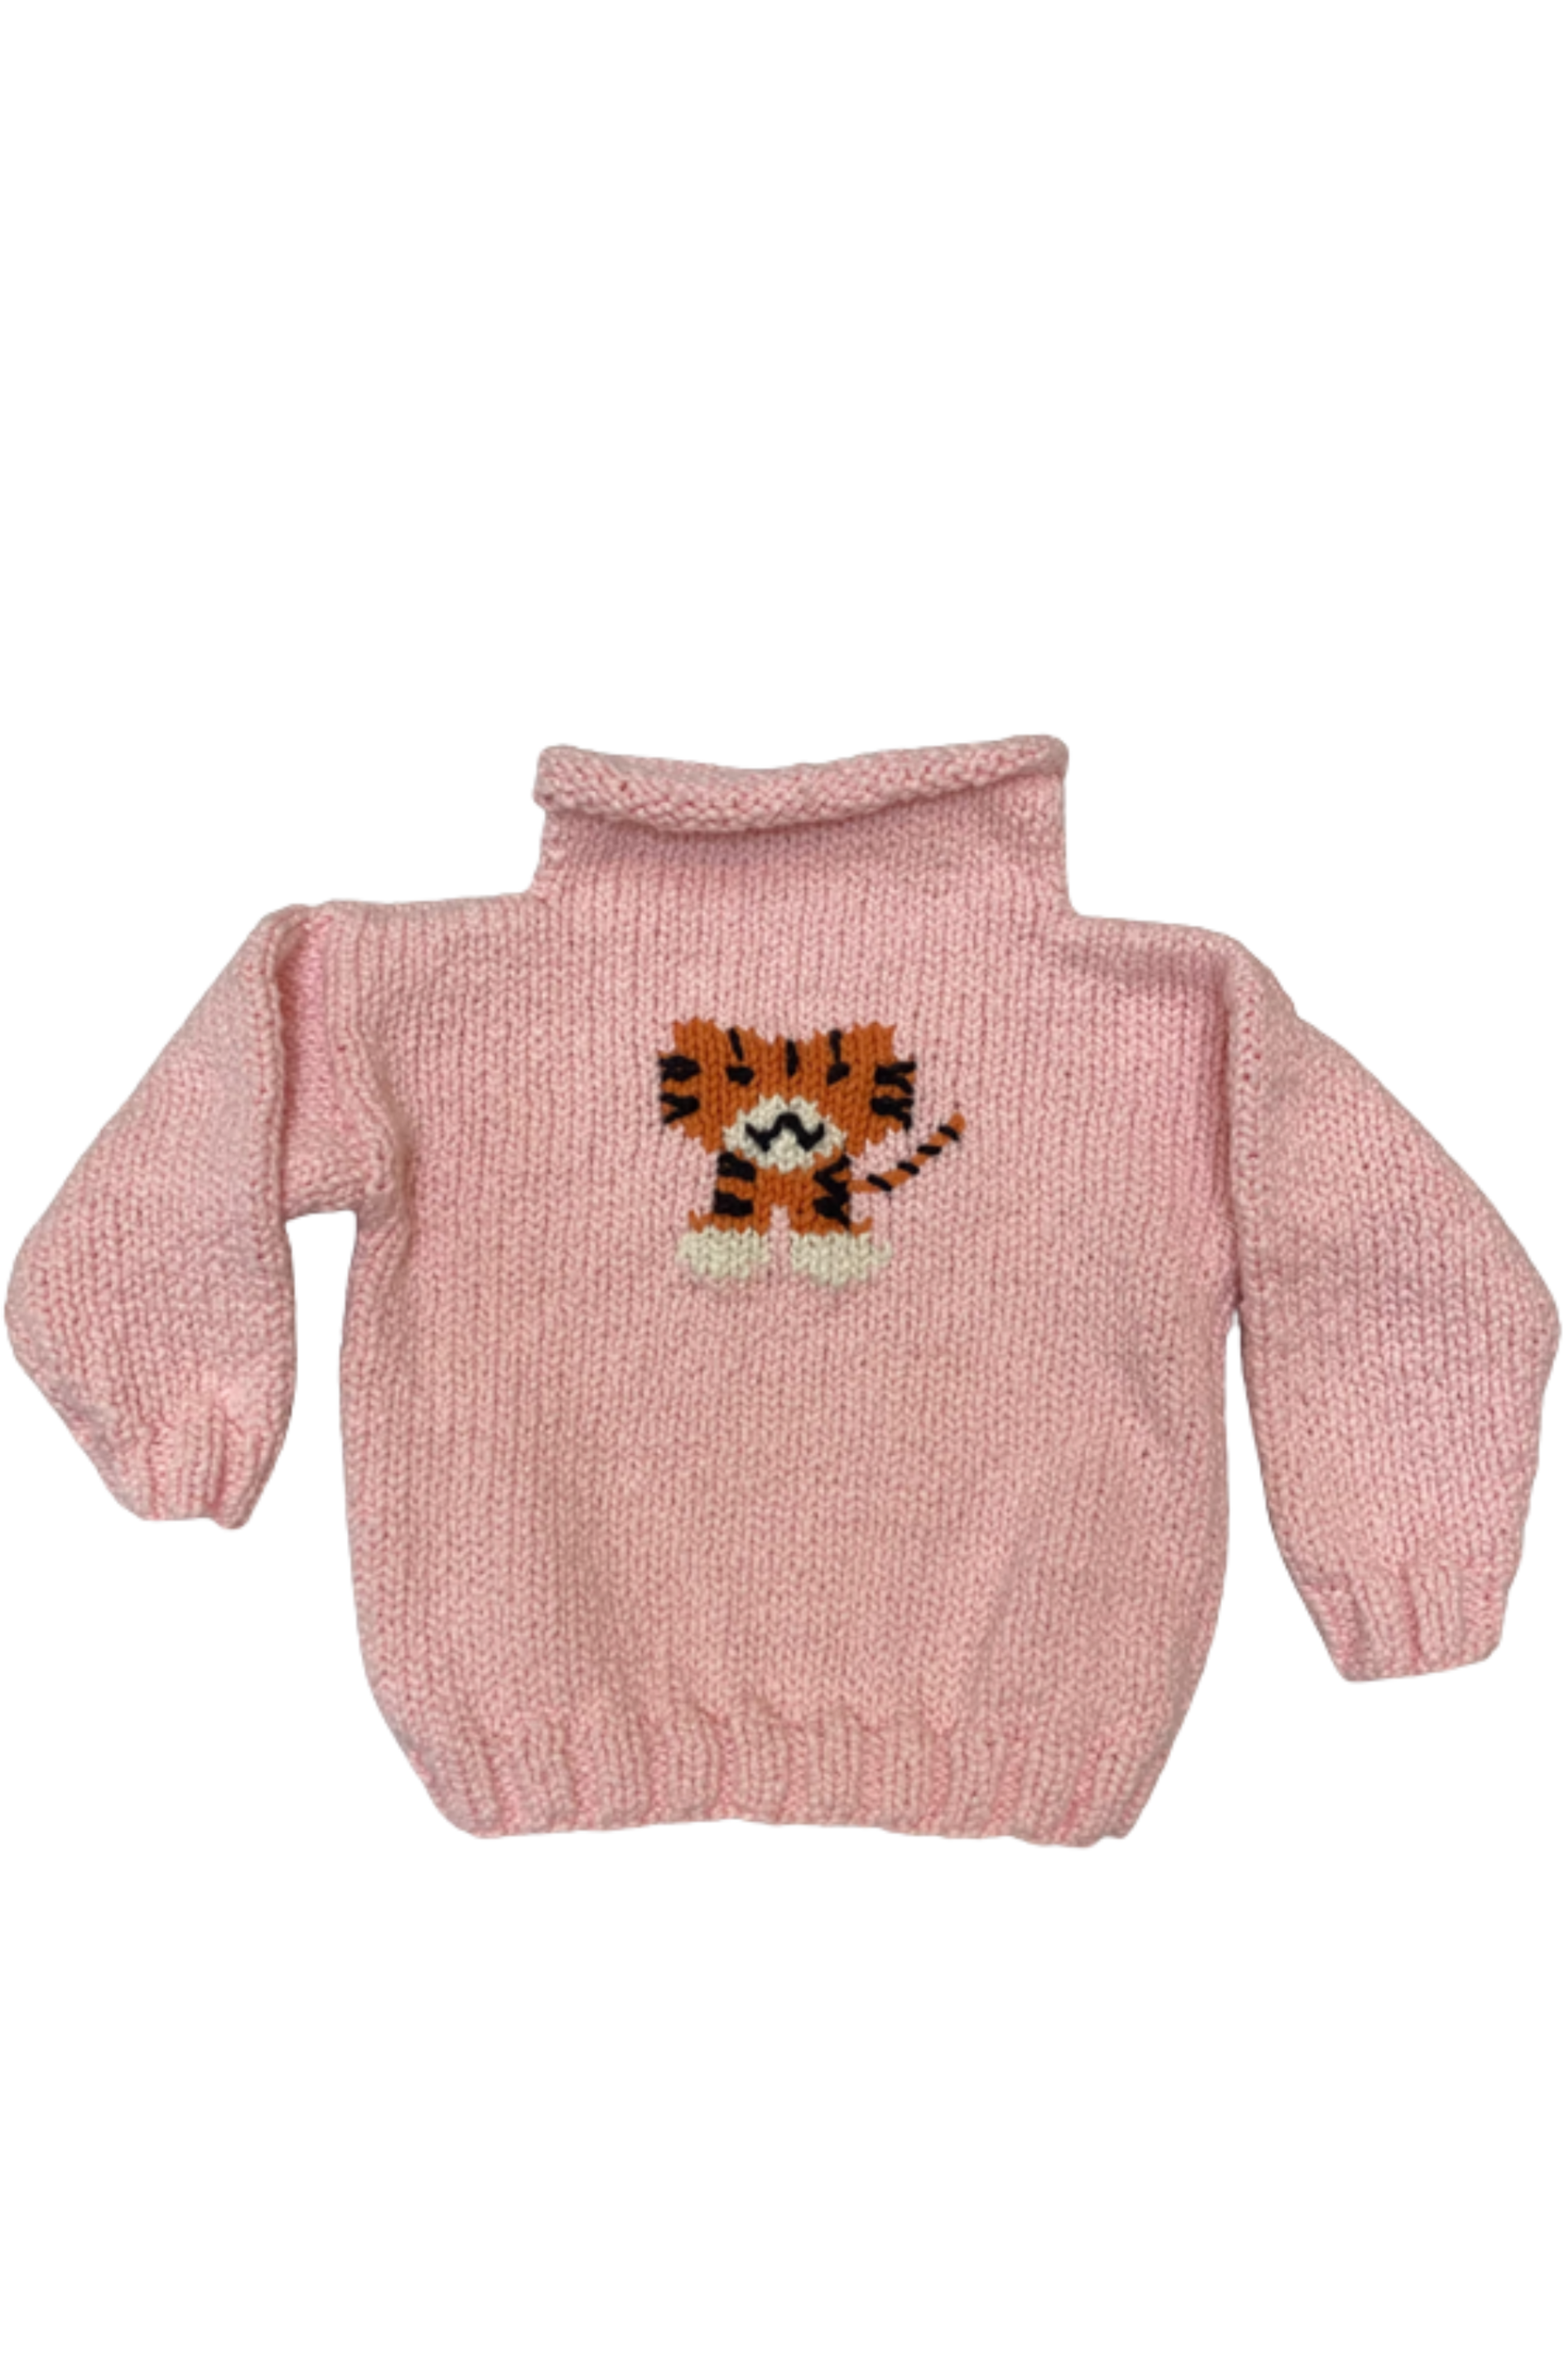 Hearthside Handworks Tiger Sweater 3